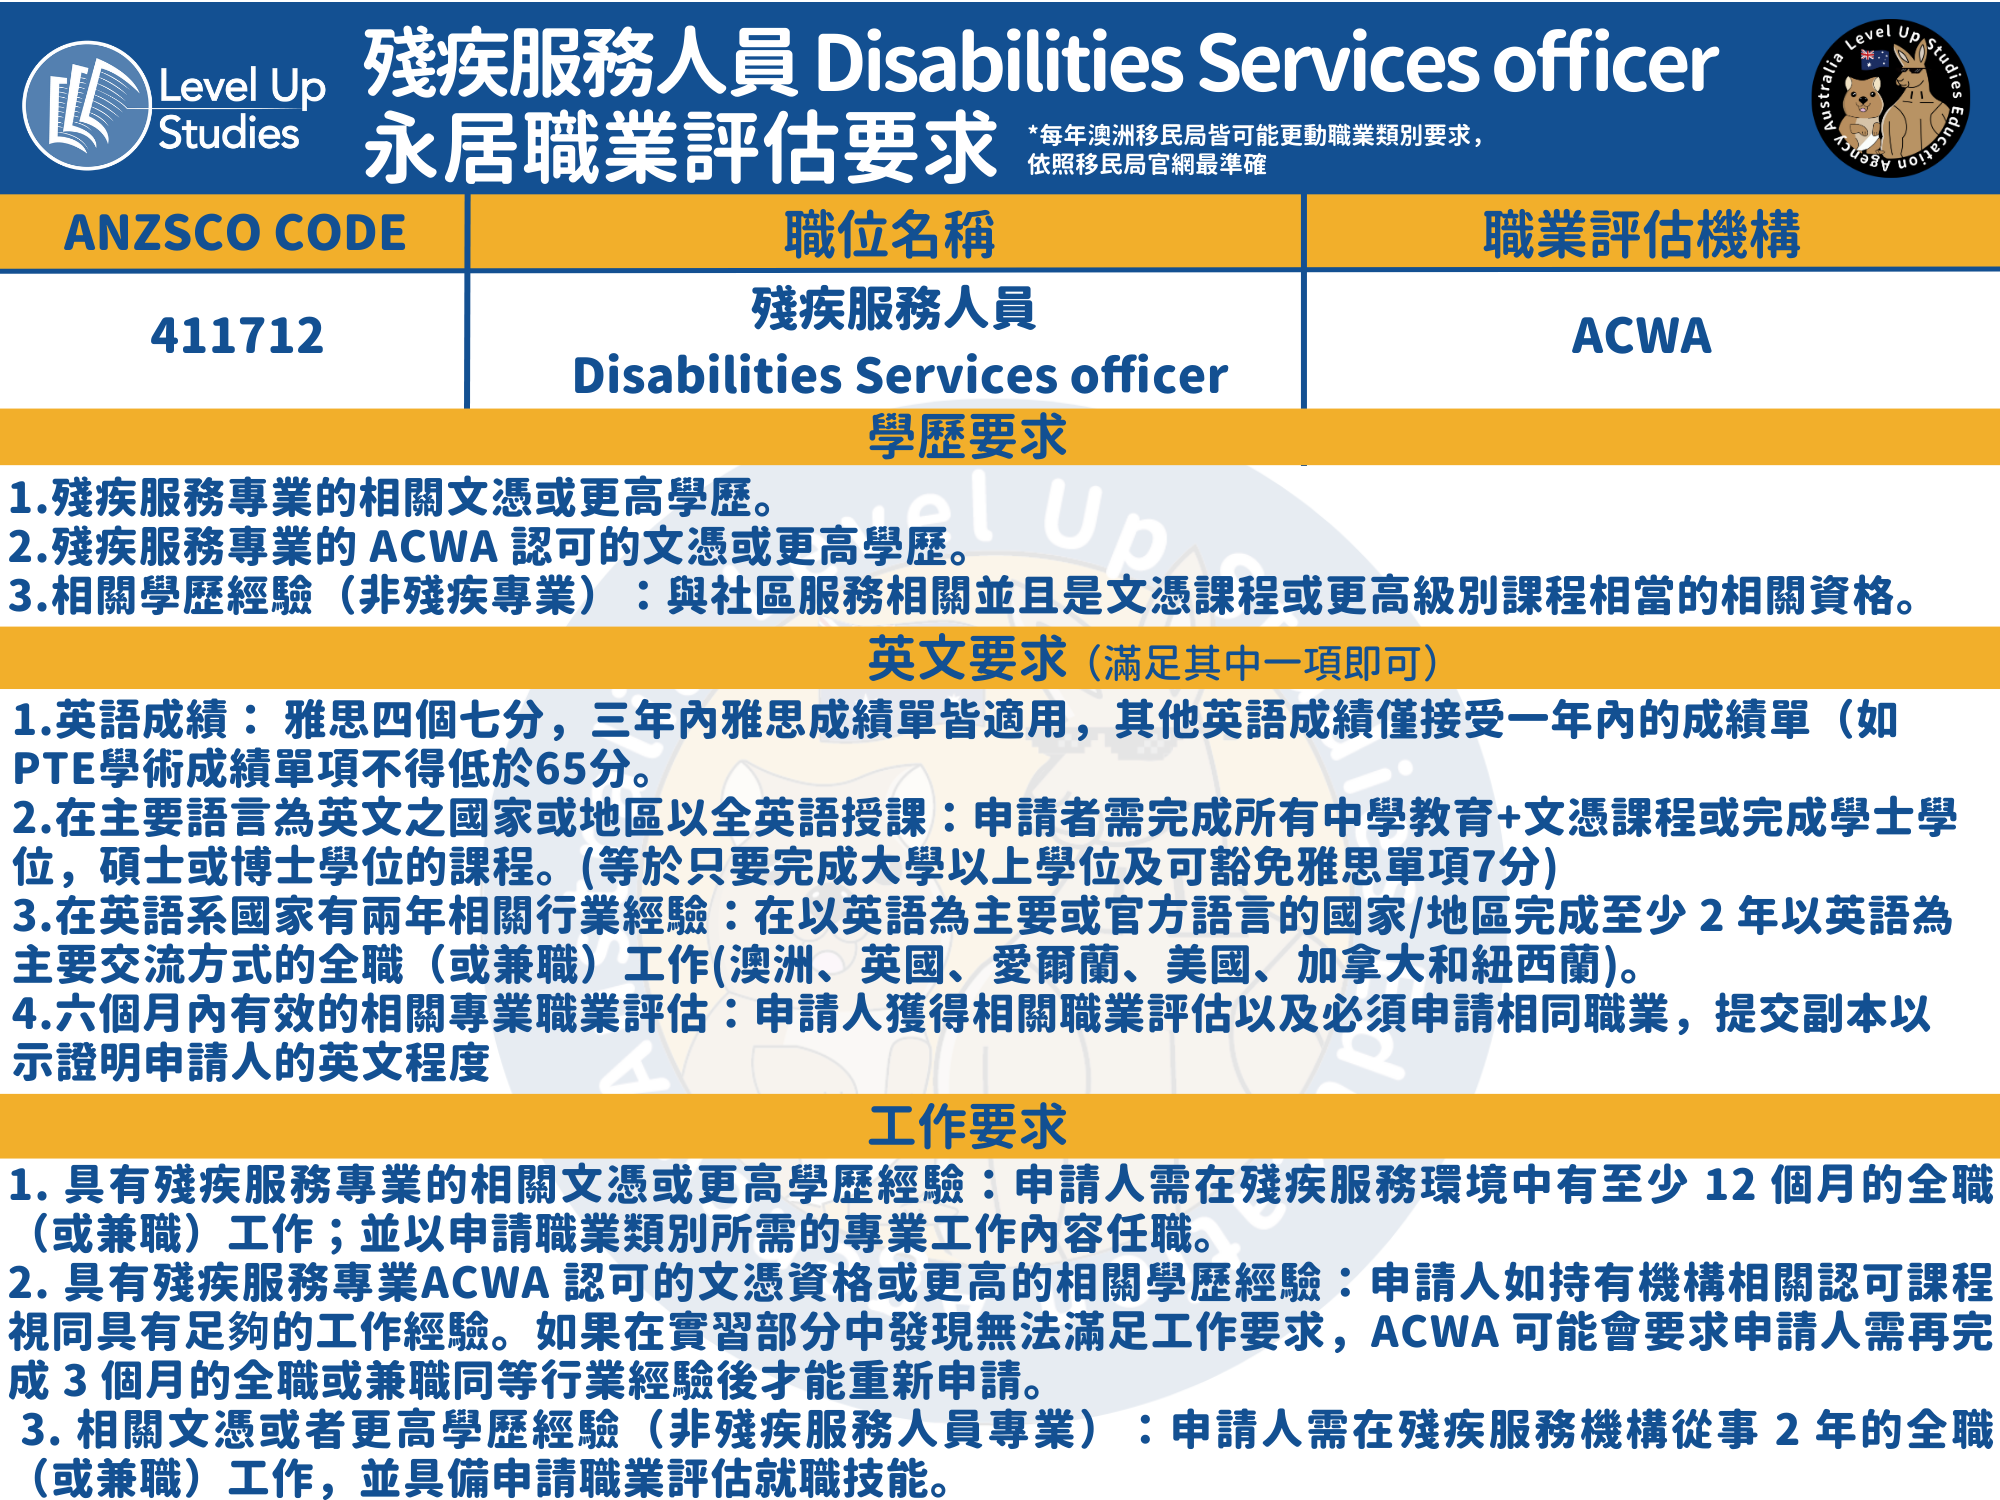 澳洲殘疾服務人員 Disabilities Services officer職業評估